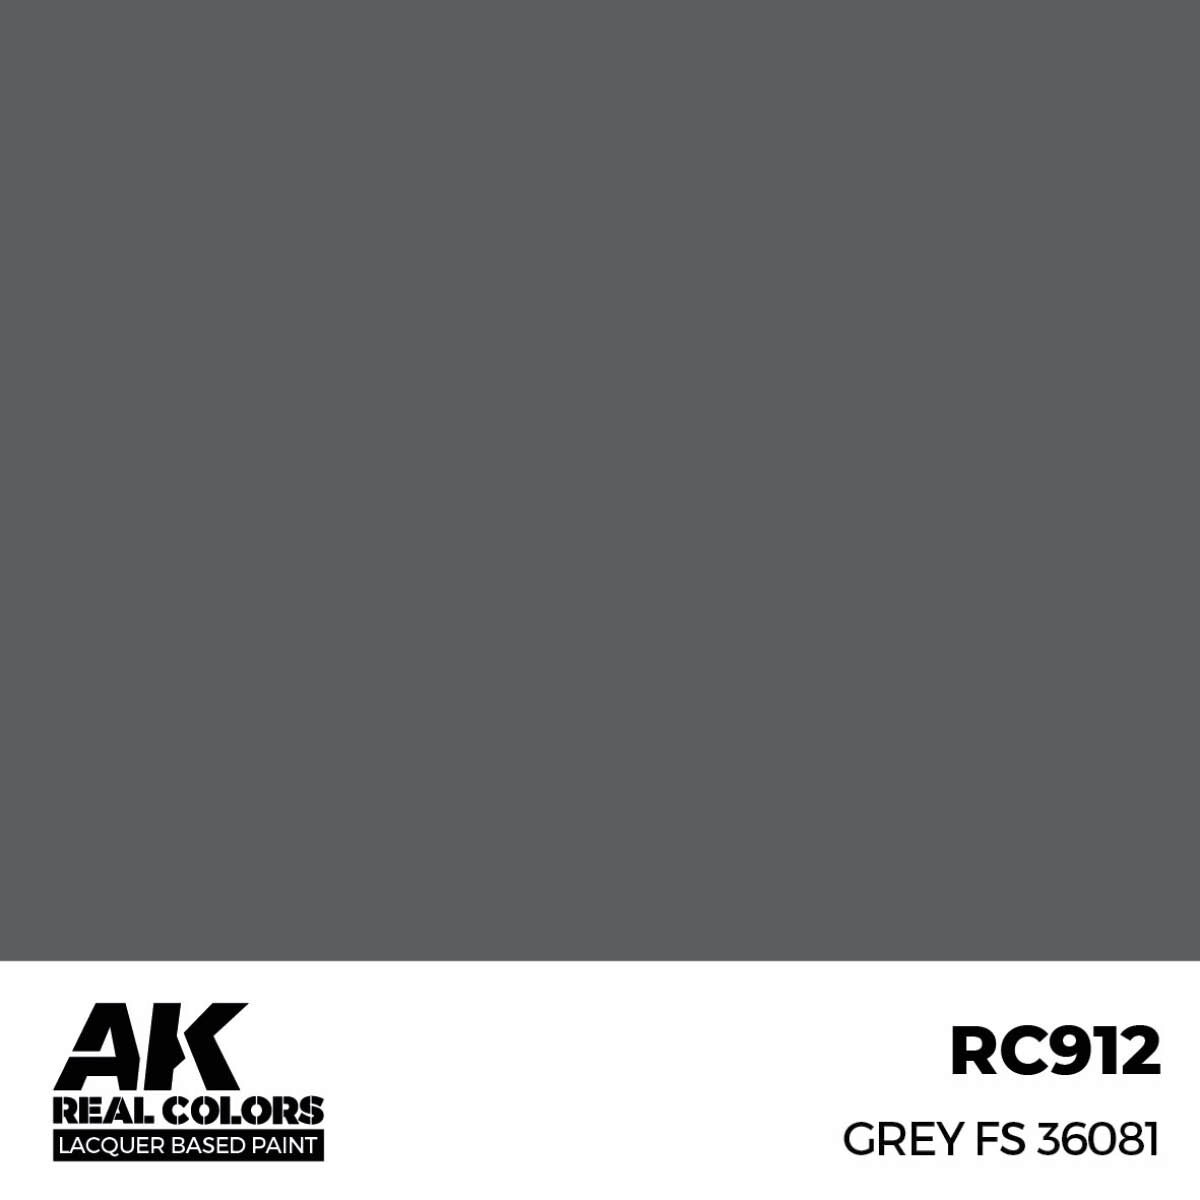 AK RC912 Real Colors Grey FS 36081 17 ml.